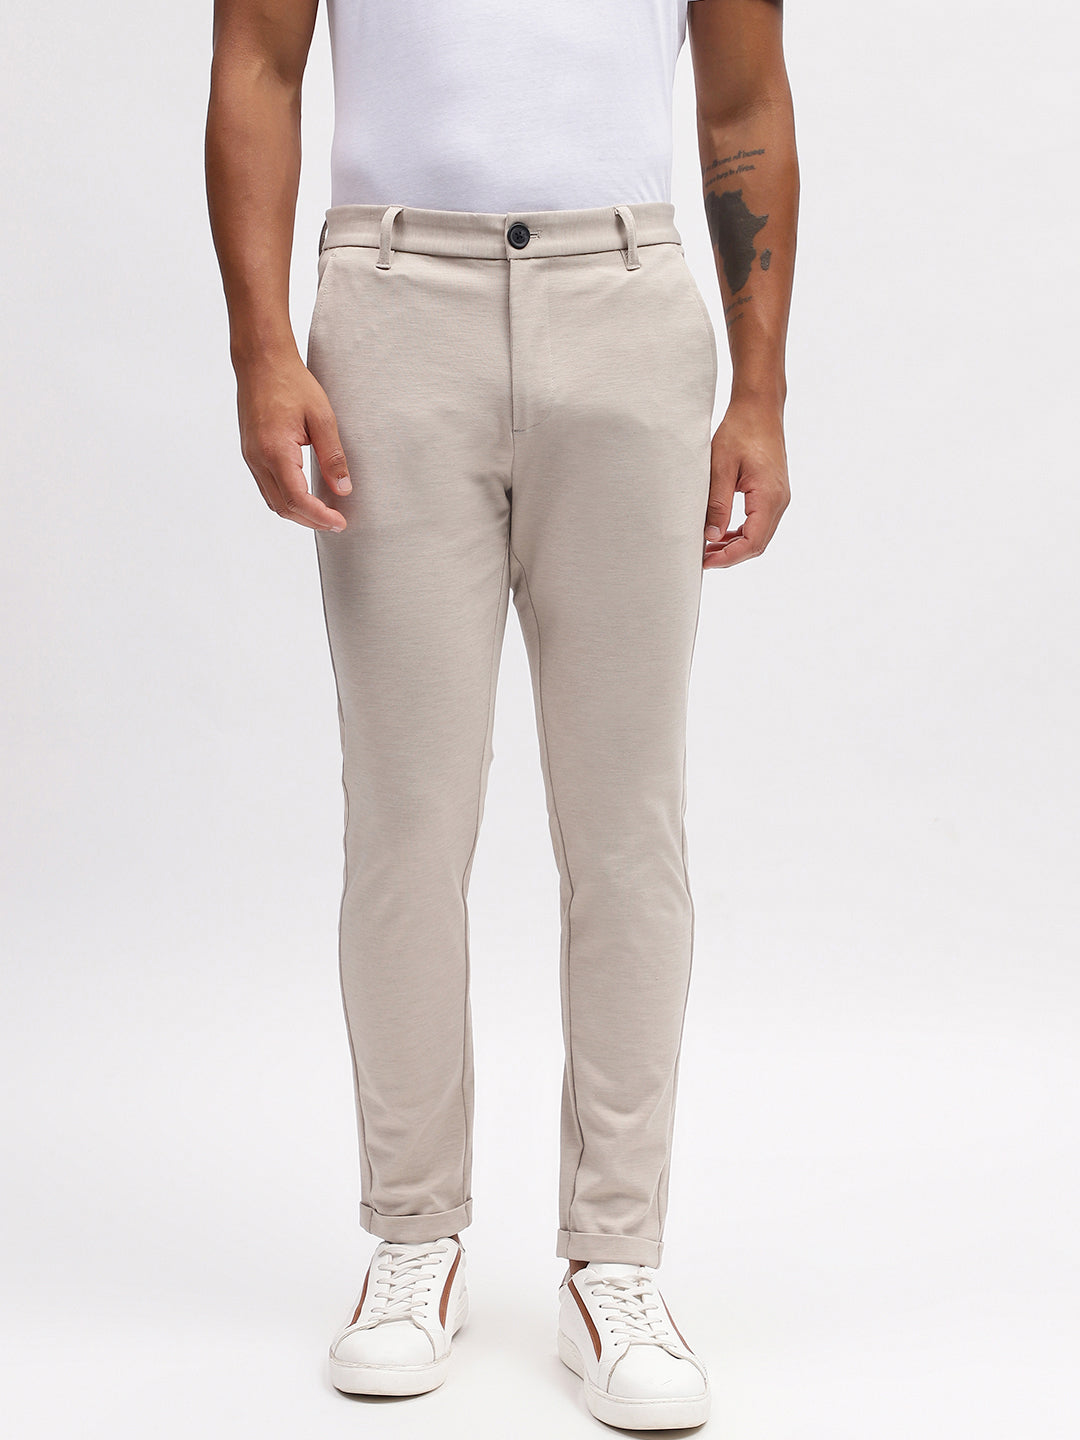 Buy Cream Linen Pant, Casual Beige Solid Bottomwear for Men Online